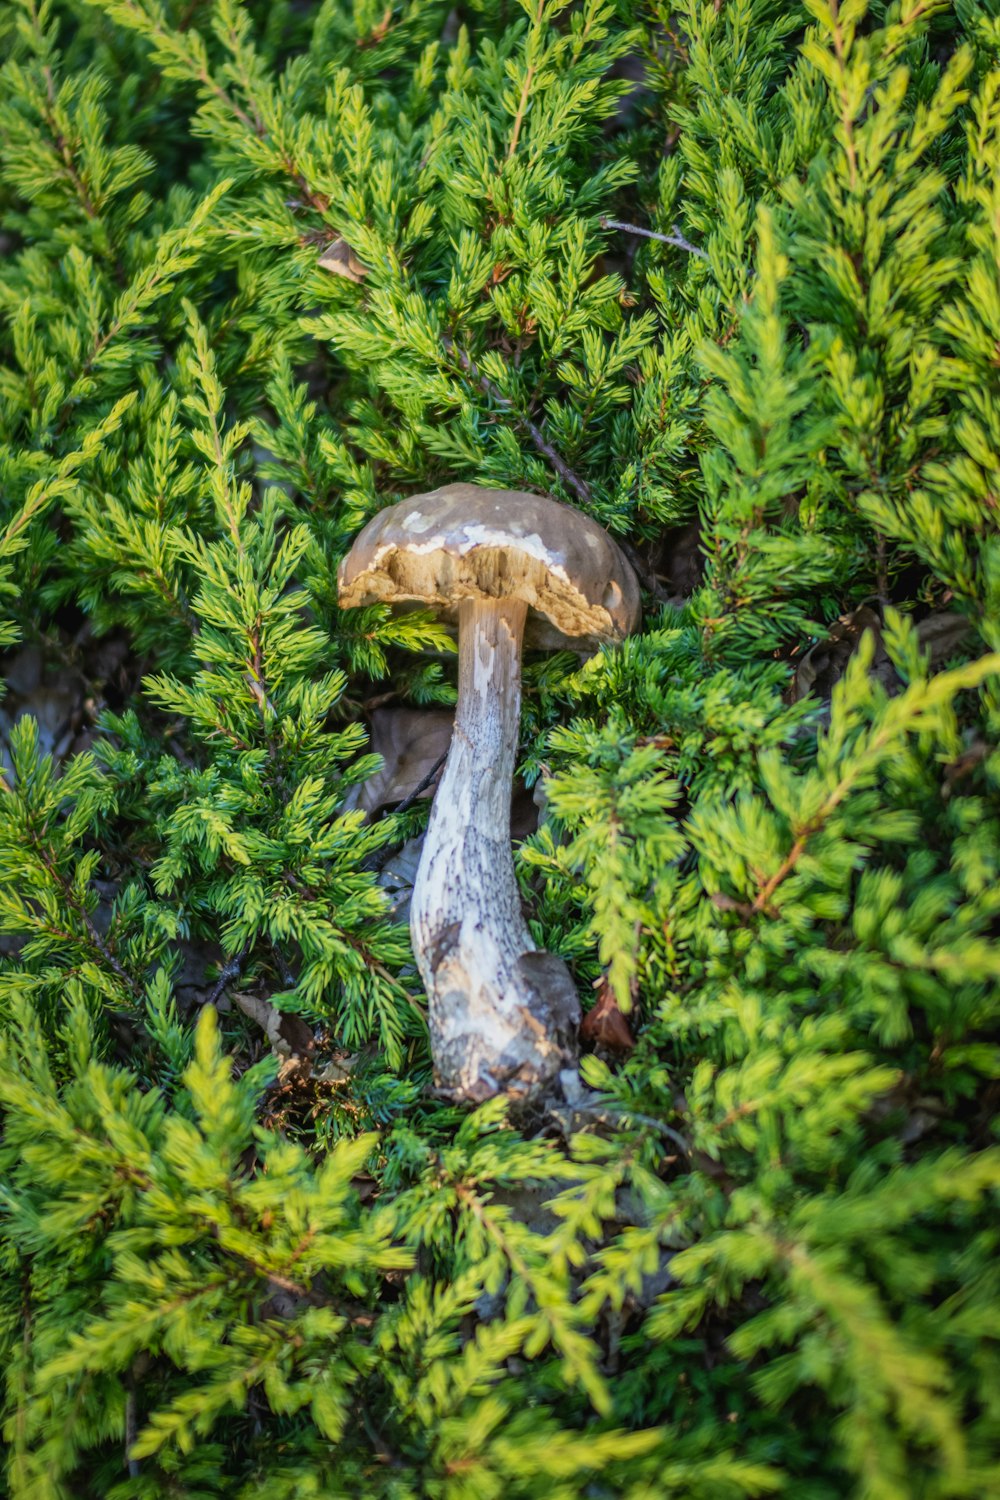 brown mushroom on green grass